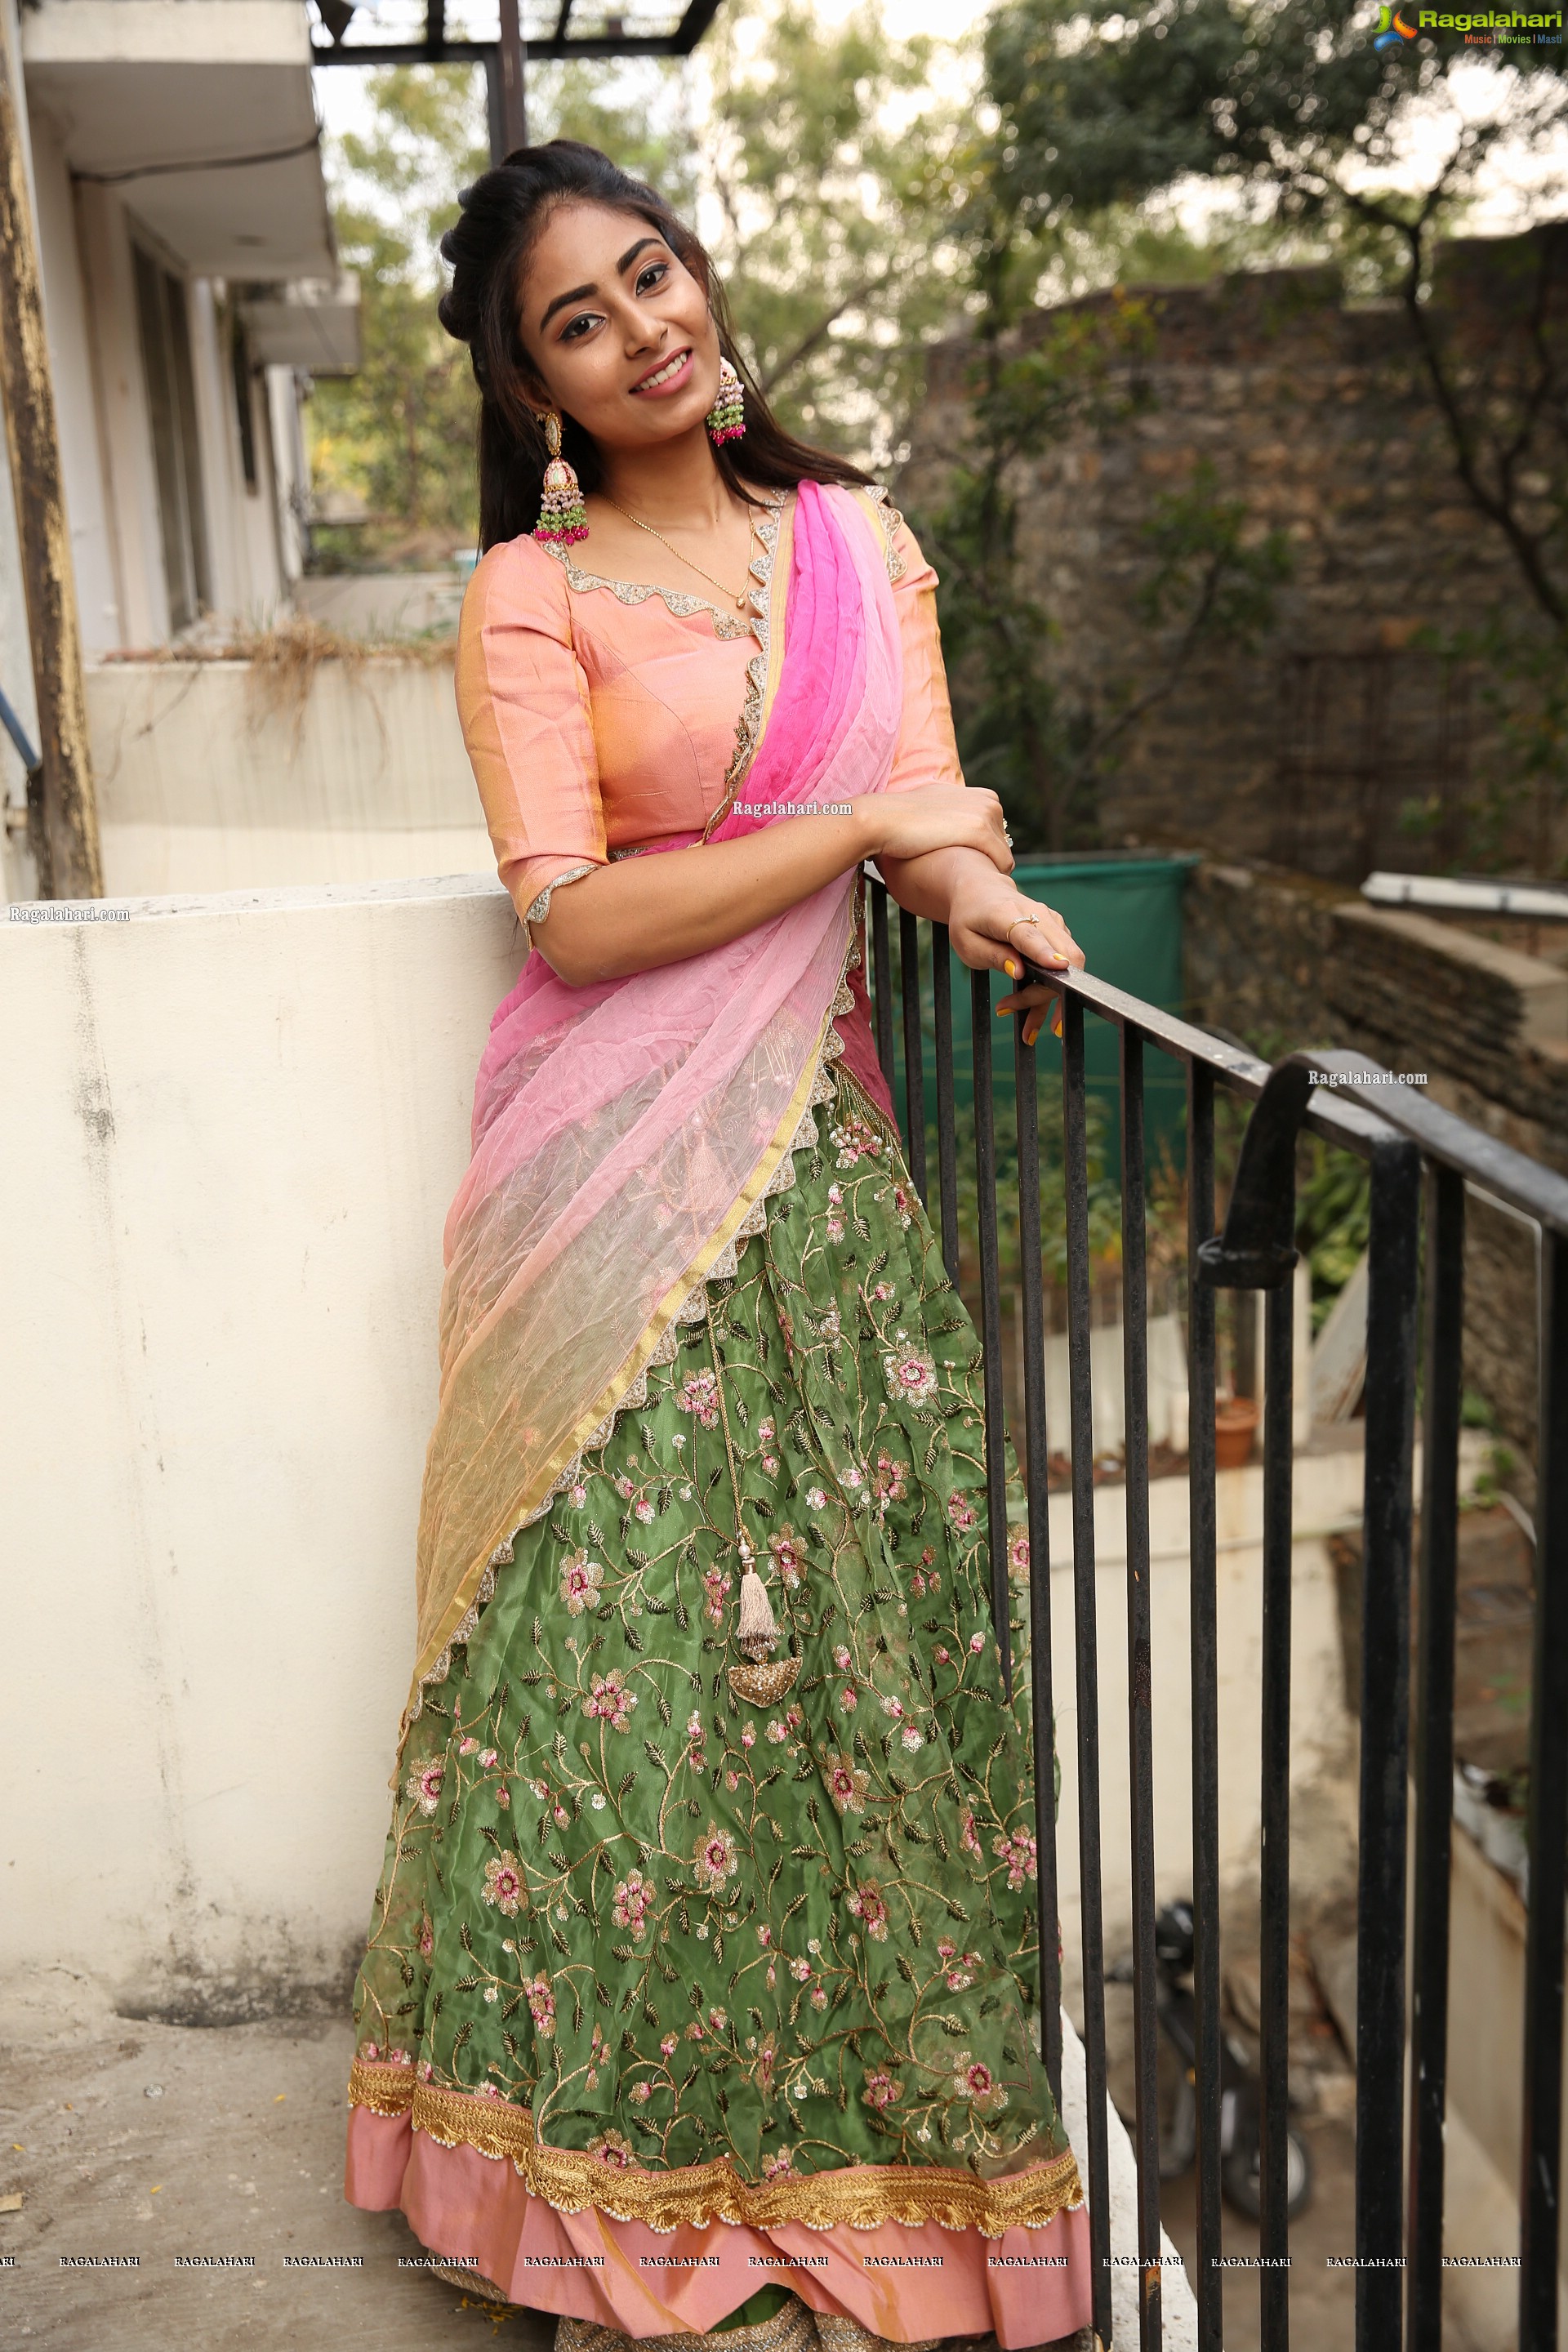 Honey Chowdary in Pink and Green Lehenga Choli, HD Photo Gallery